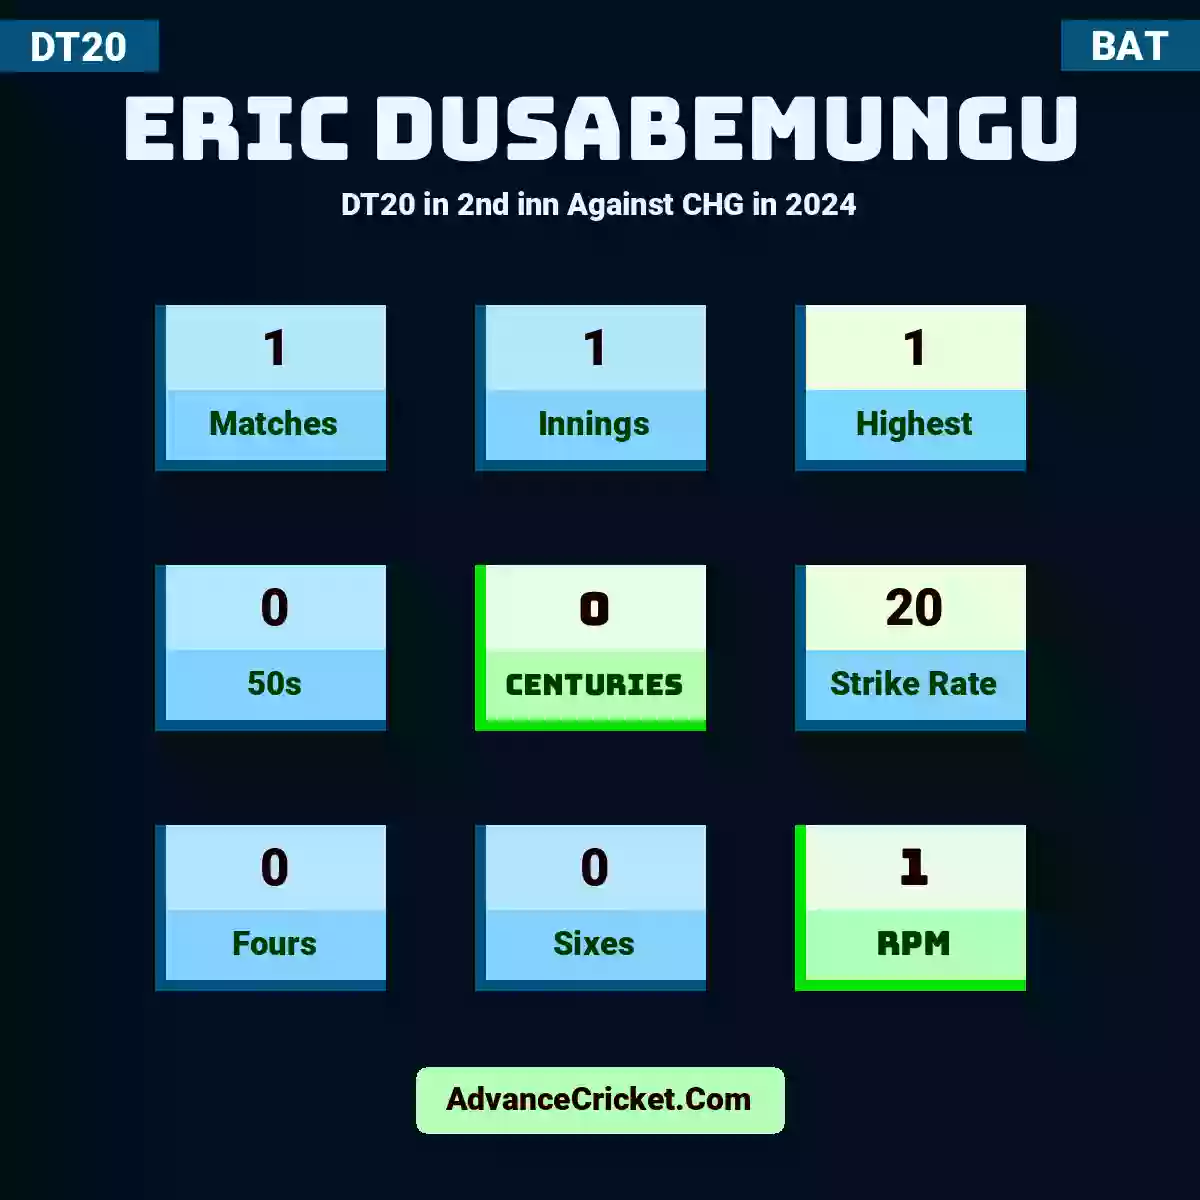 Eric Dusabemungu DT20  in 2nd inn Against CHG in 2024, Eric Dusabemungu played 1 matches, scored 1 runs as highest, 0 half-centuries, and 0 centuries, with a strike rate of 20. E.Dusabemungu hit 0 fours and 0 sixes, with an RPM of 1.